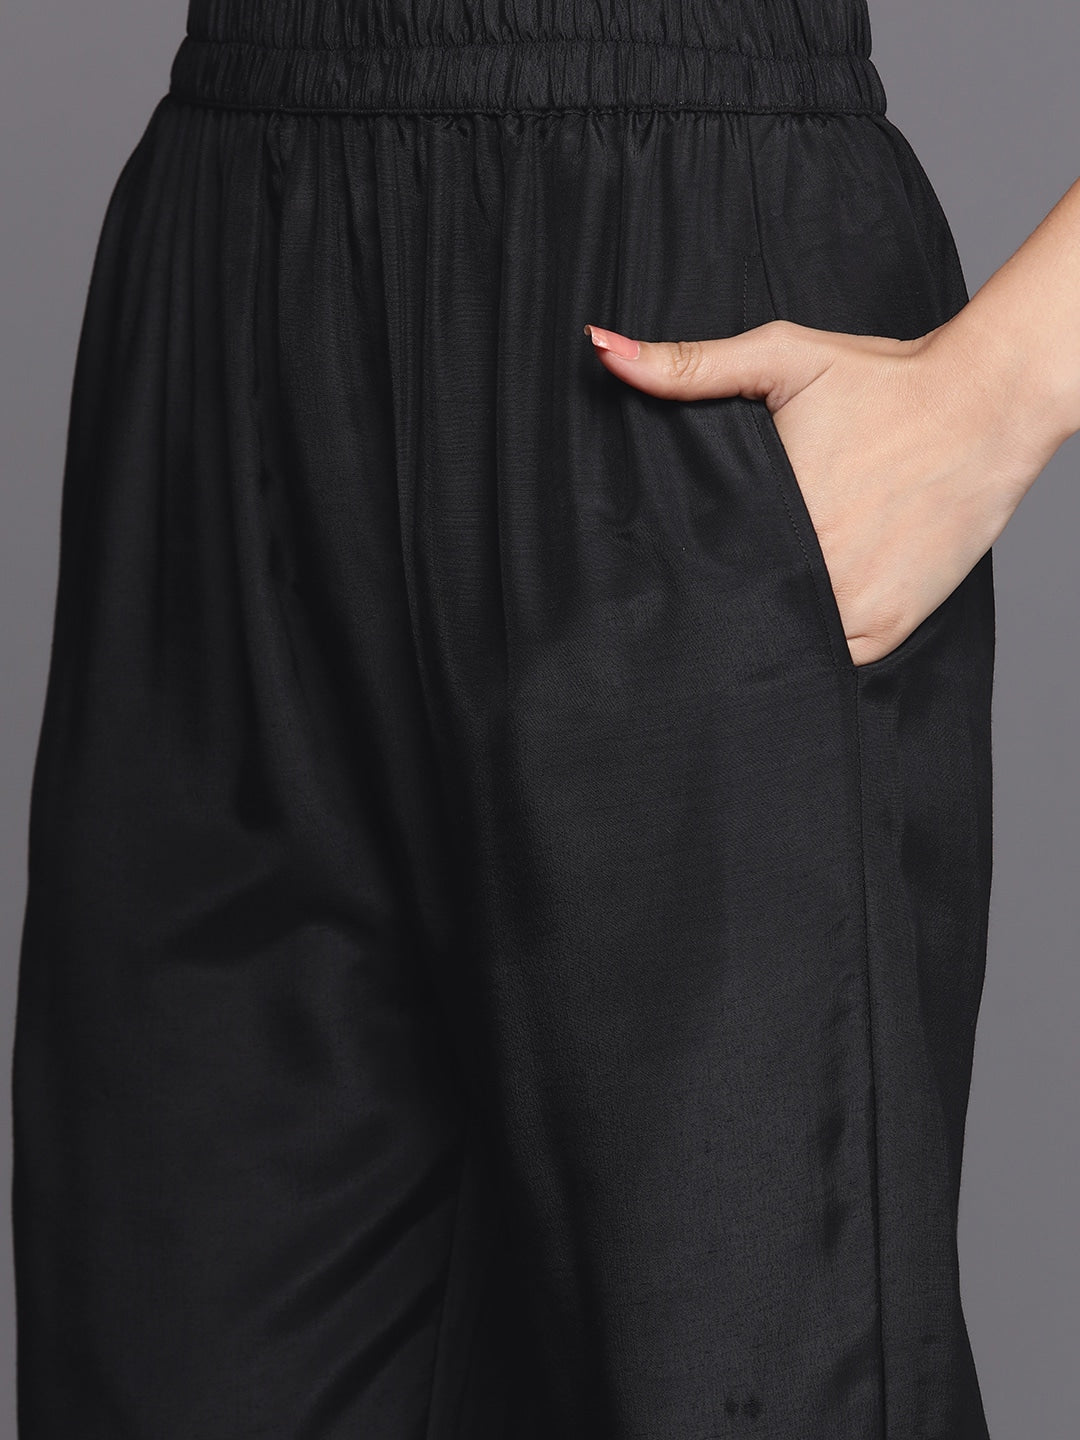 Women Black Floral Motifs Yoke Design Salwar Suit